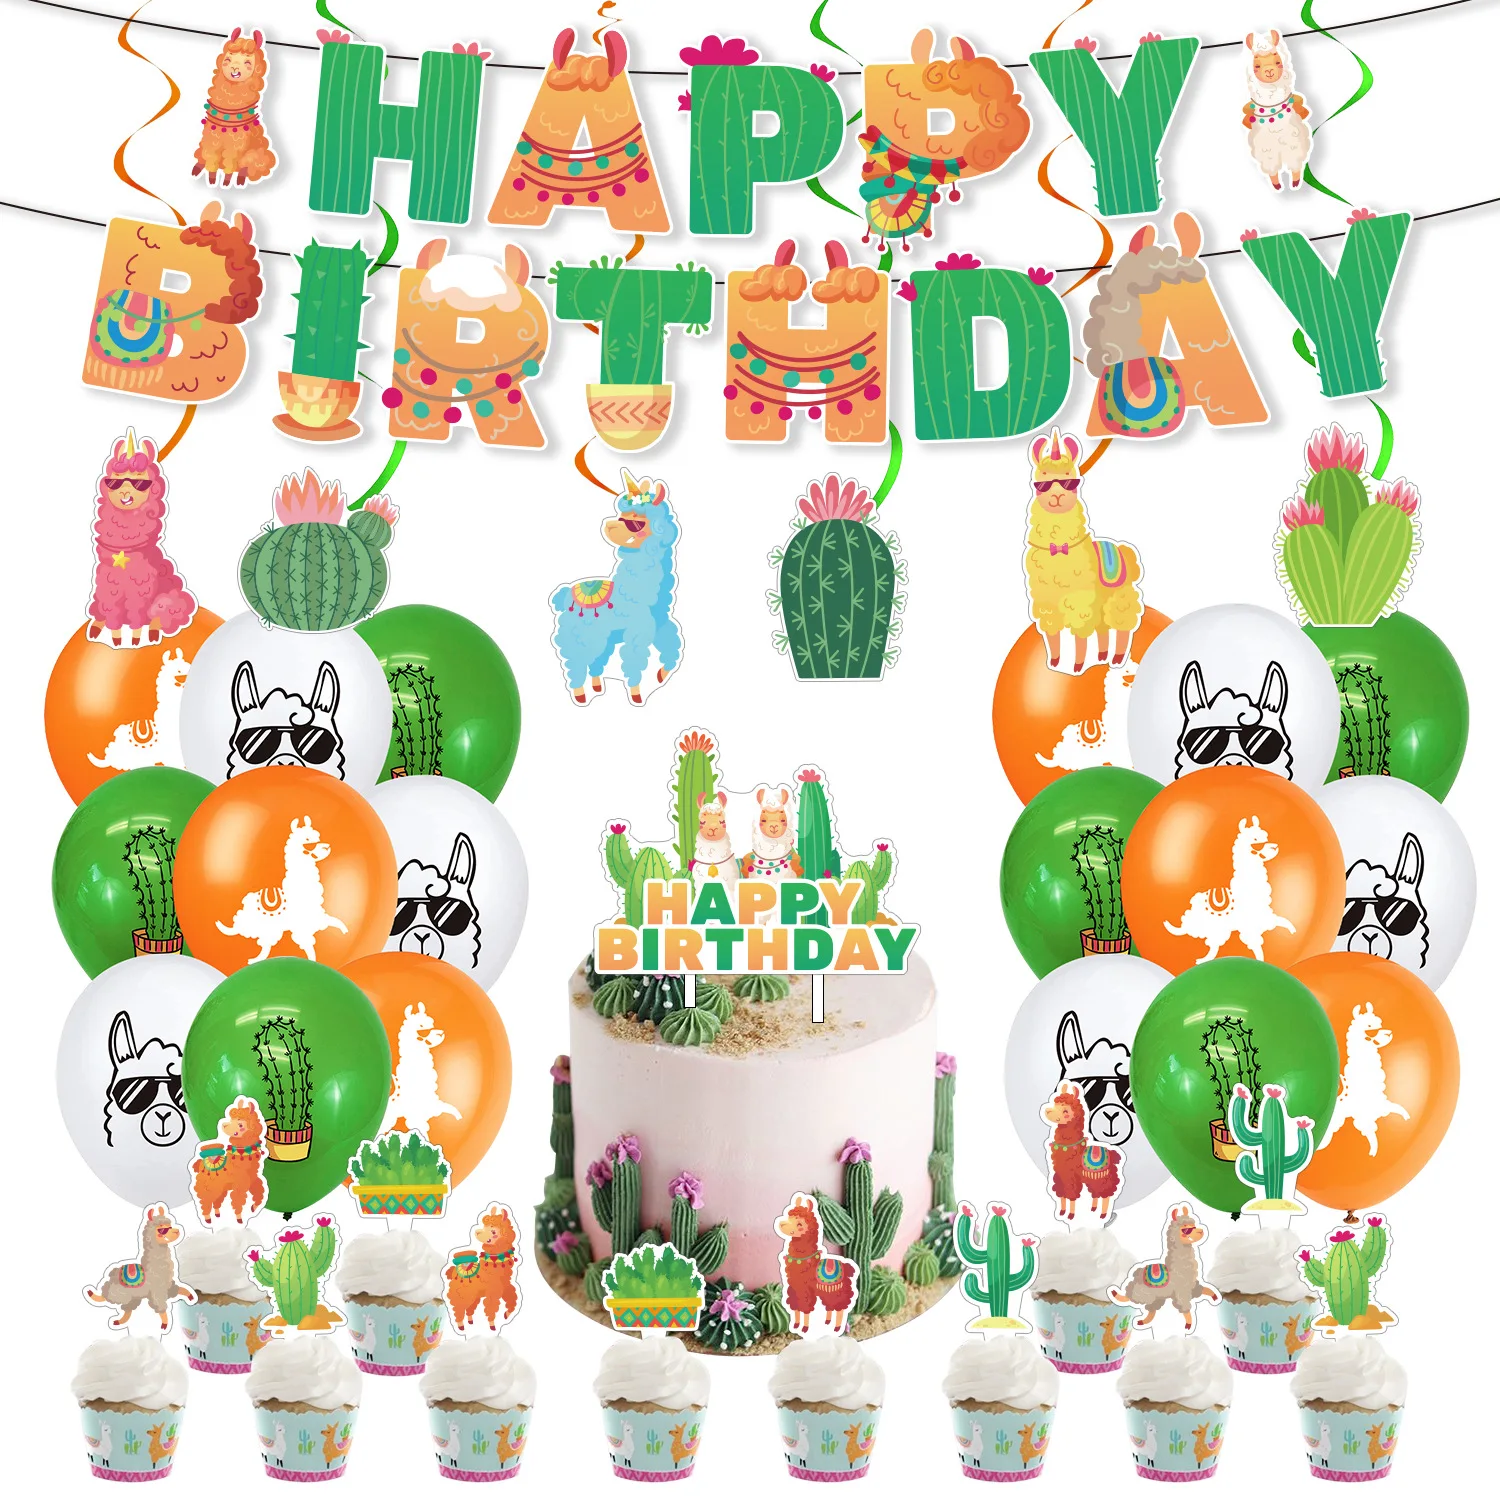 

Sursurprise Cartoon Alpaca Cactus Theme Birthday Party Decoration Balloons Happy Birthday Banner Hanging Swirls Cake Topper Set